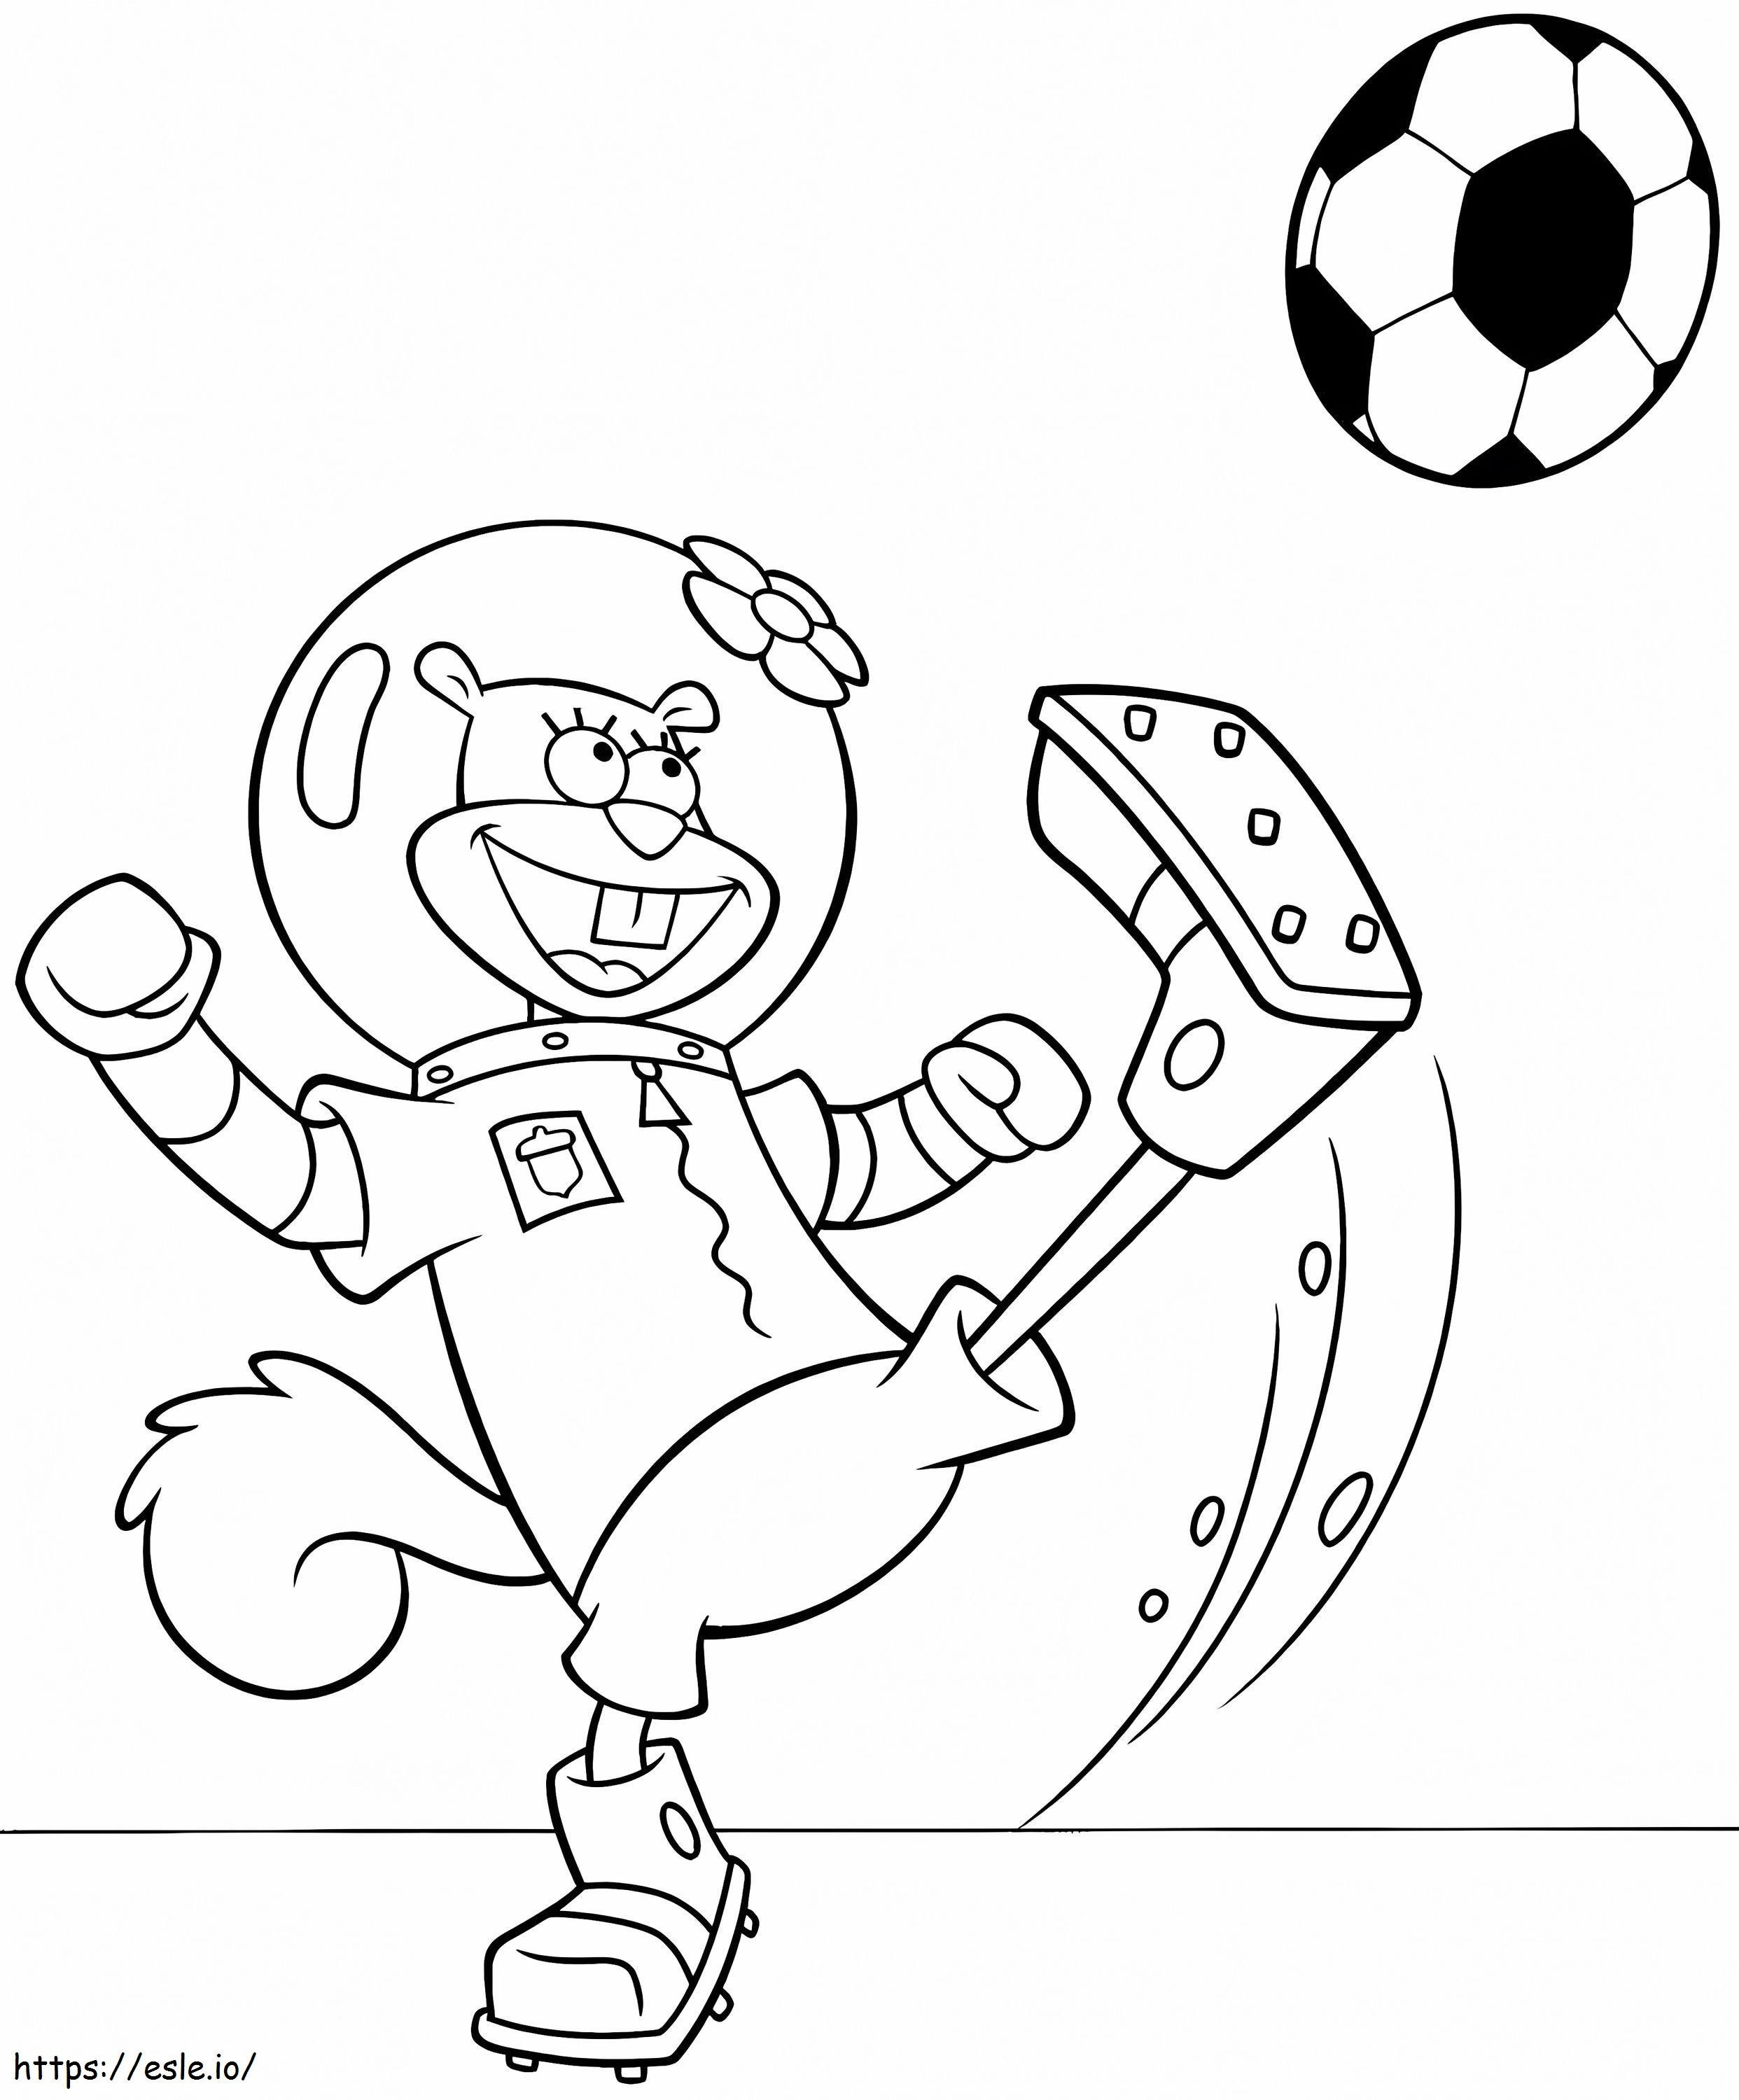 Sandy Bochechas Jogando Futebol para colorir